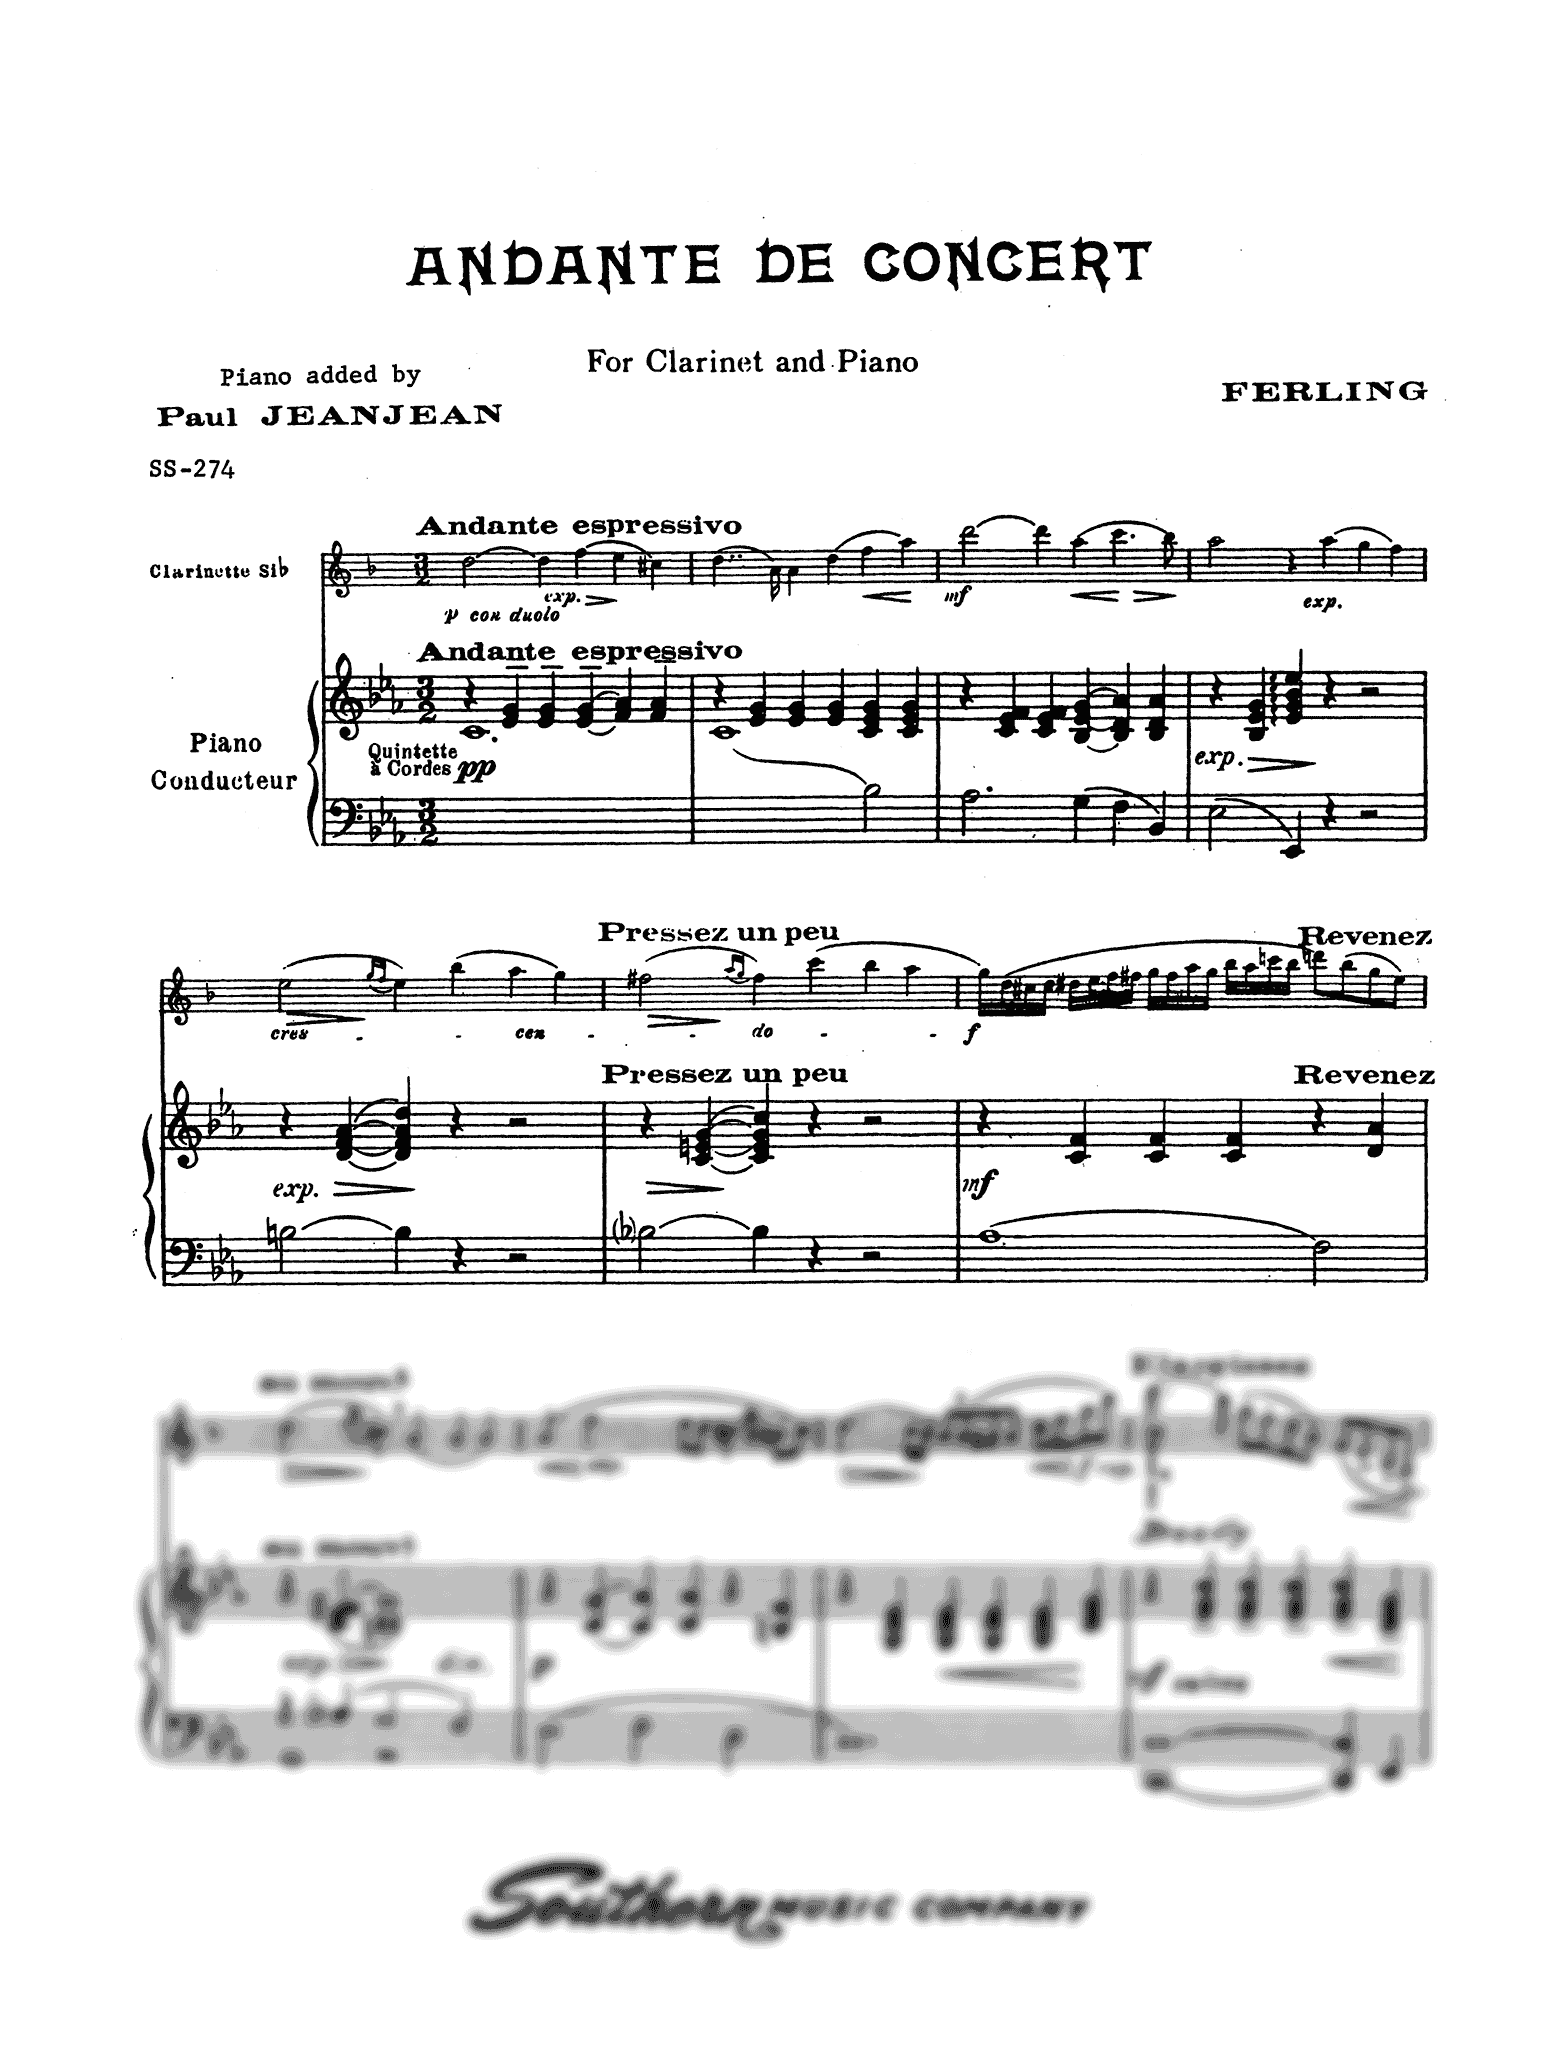 Ferling Andante de concert, from 48 Études, Op. 31 No. 27 arranged by Jeanjean for clarinet & piano score